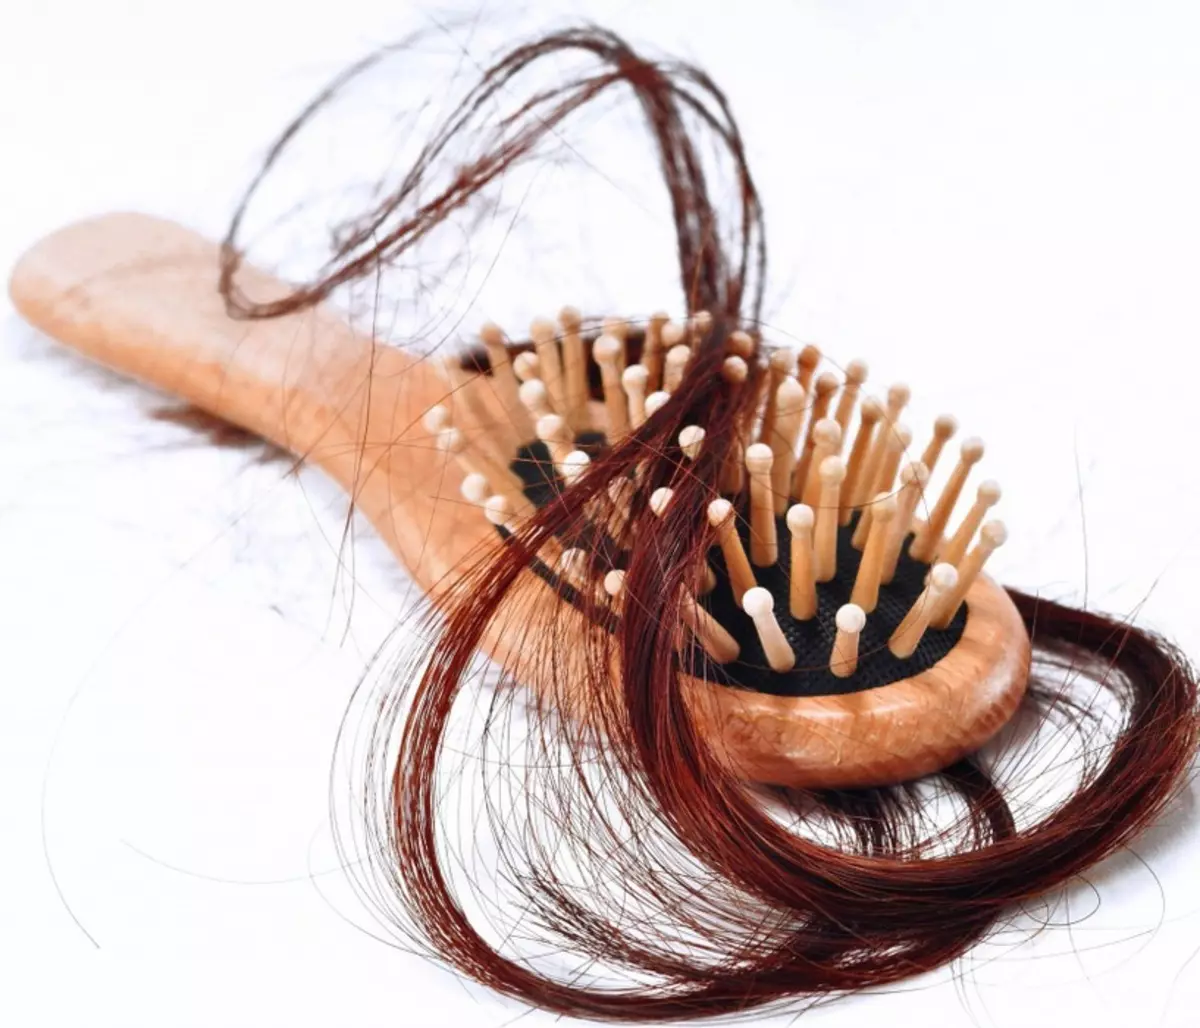 Laminasi rambut oleh sarana profesional di rumah: obat apa yang lebih baik digunakan di rumah? Ulasan perempuan 16586_5